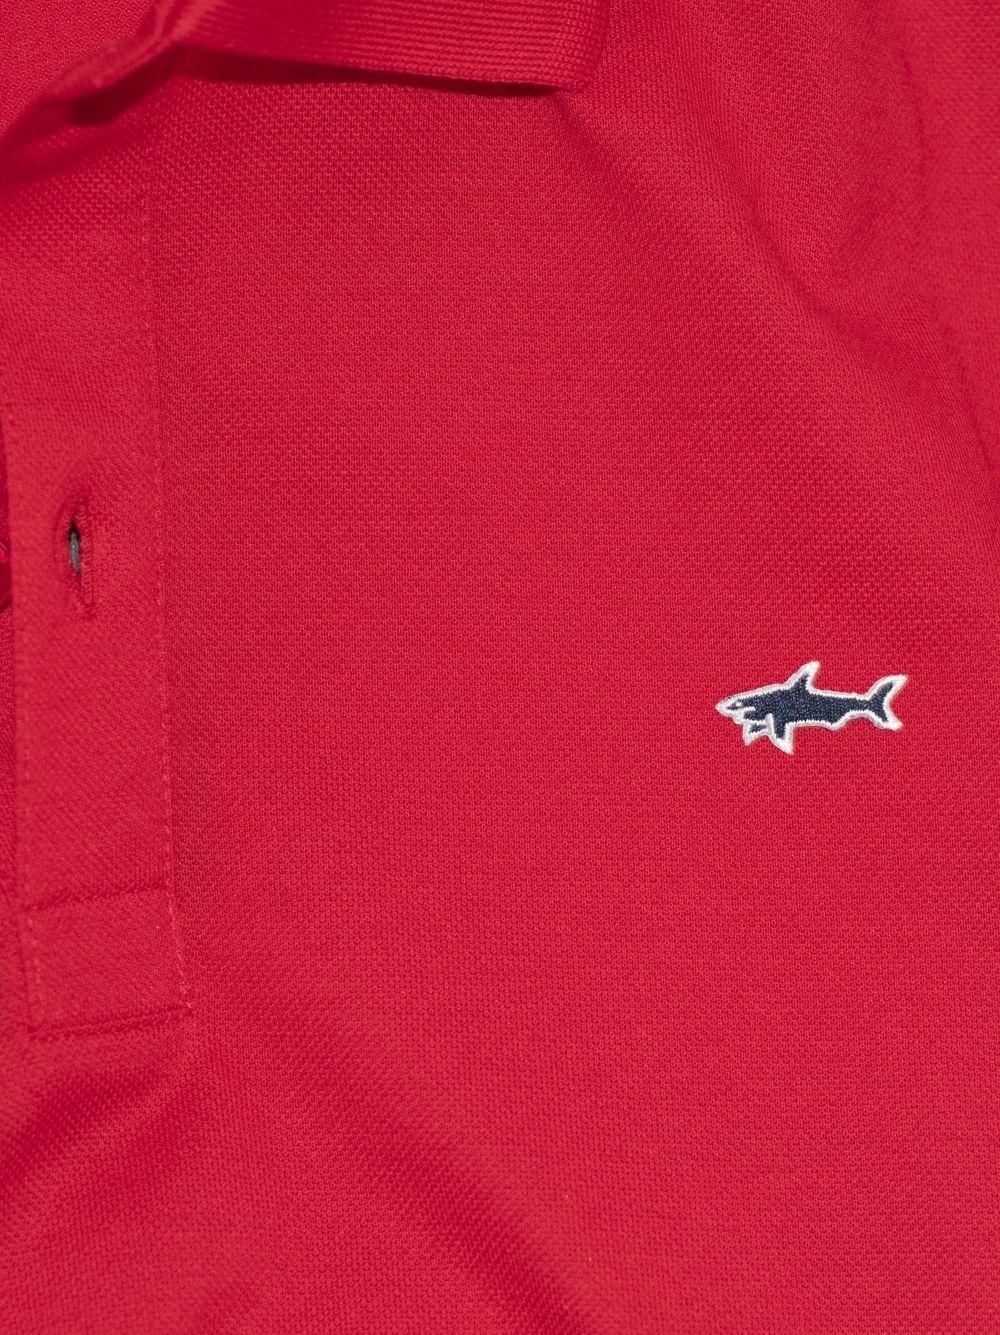 Red Polo Logo - Paul & Shark Red Classic Short Sleeve Polo Shirt | Designerwear